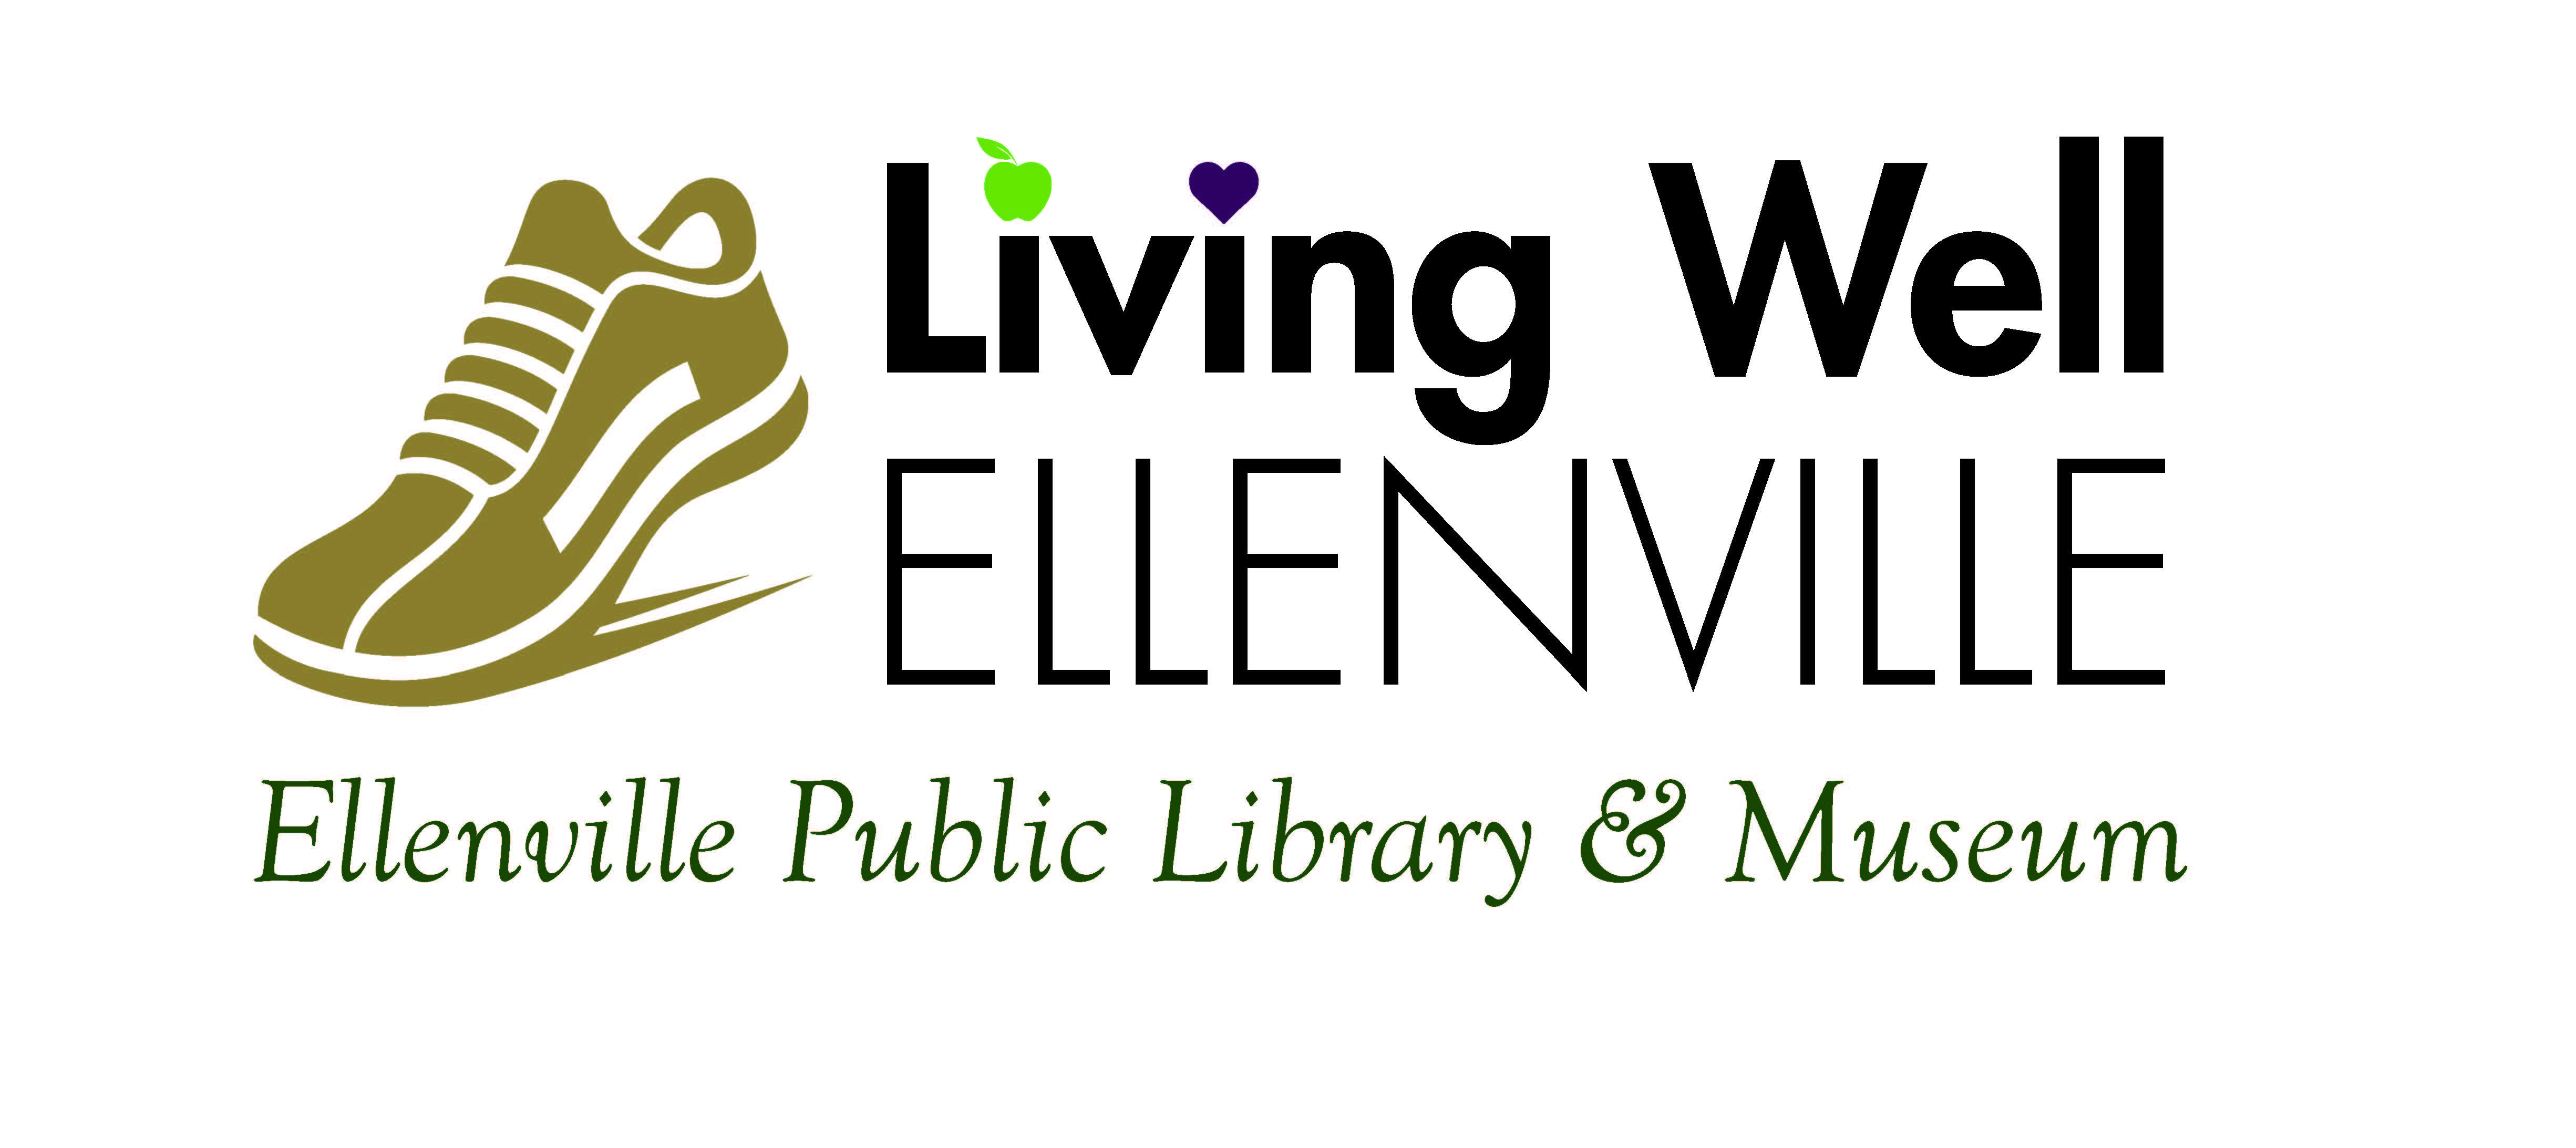 Living Well Ellenville logo